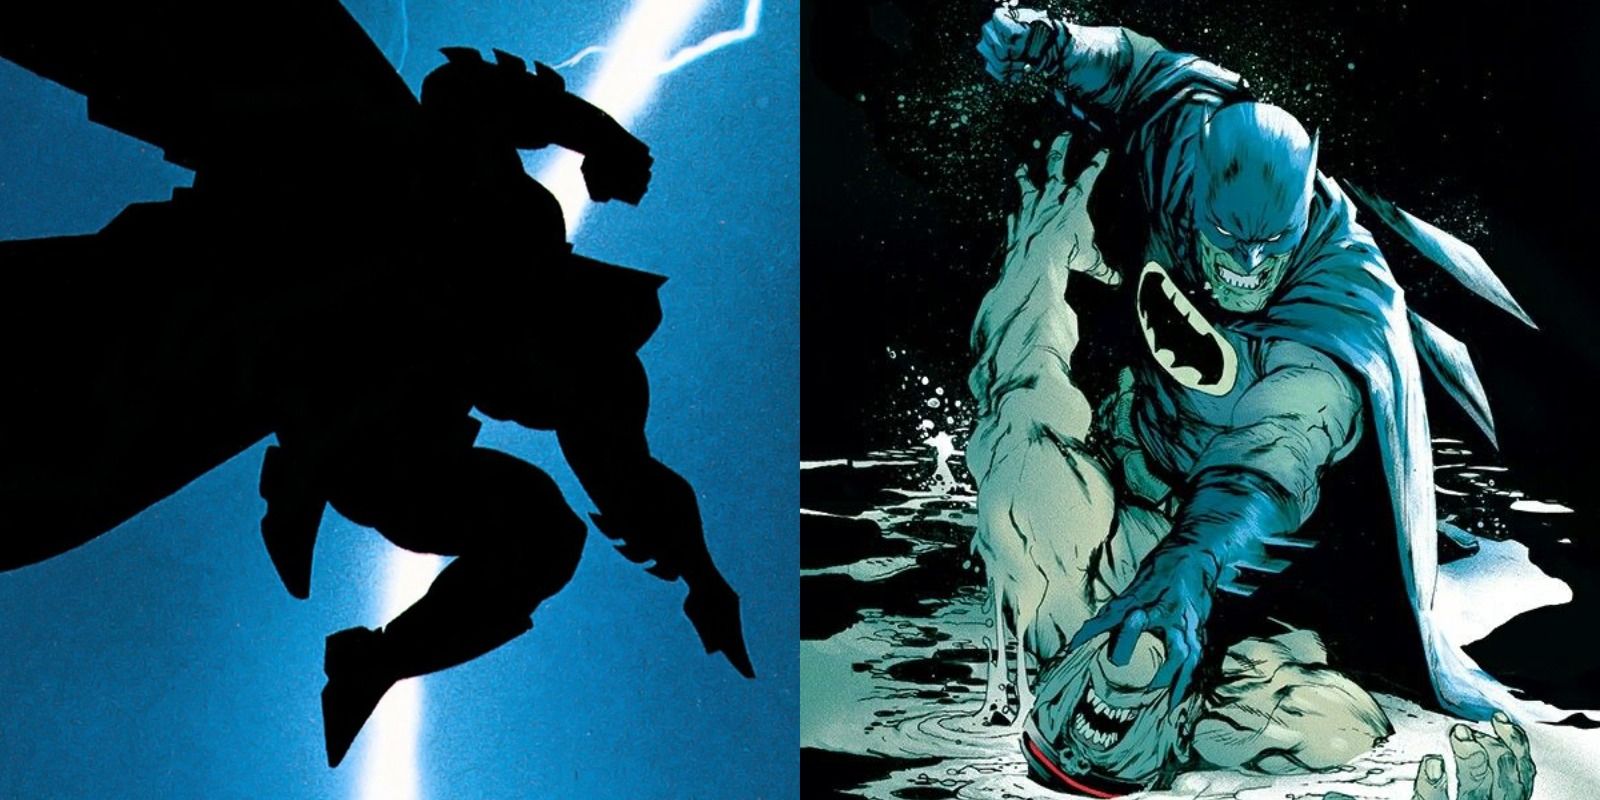 Miller's cover art for The Dark Knight Returns, and Klaus Janson's variant cover DKIII